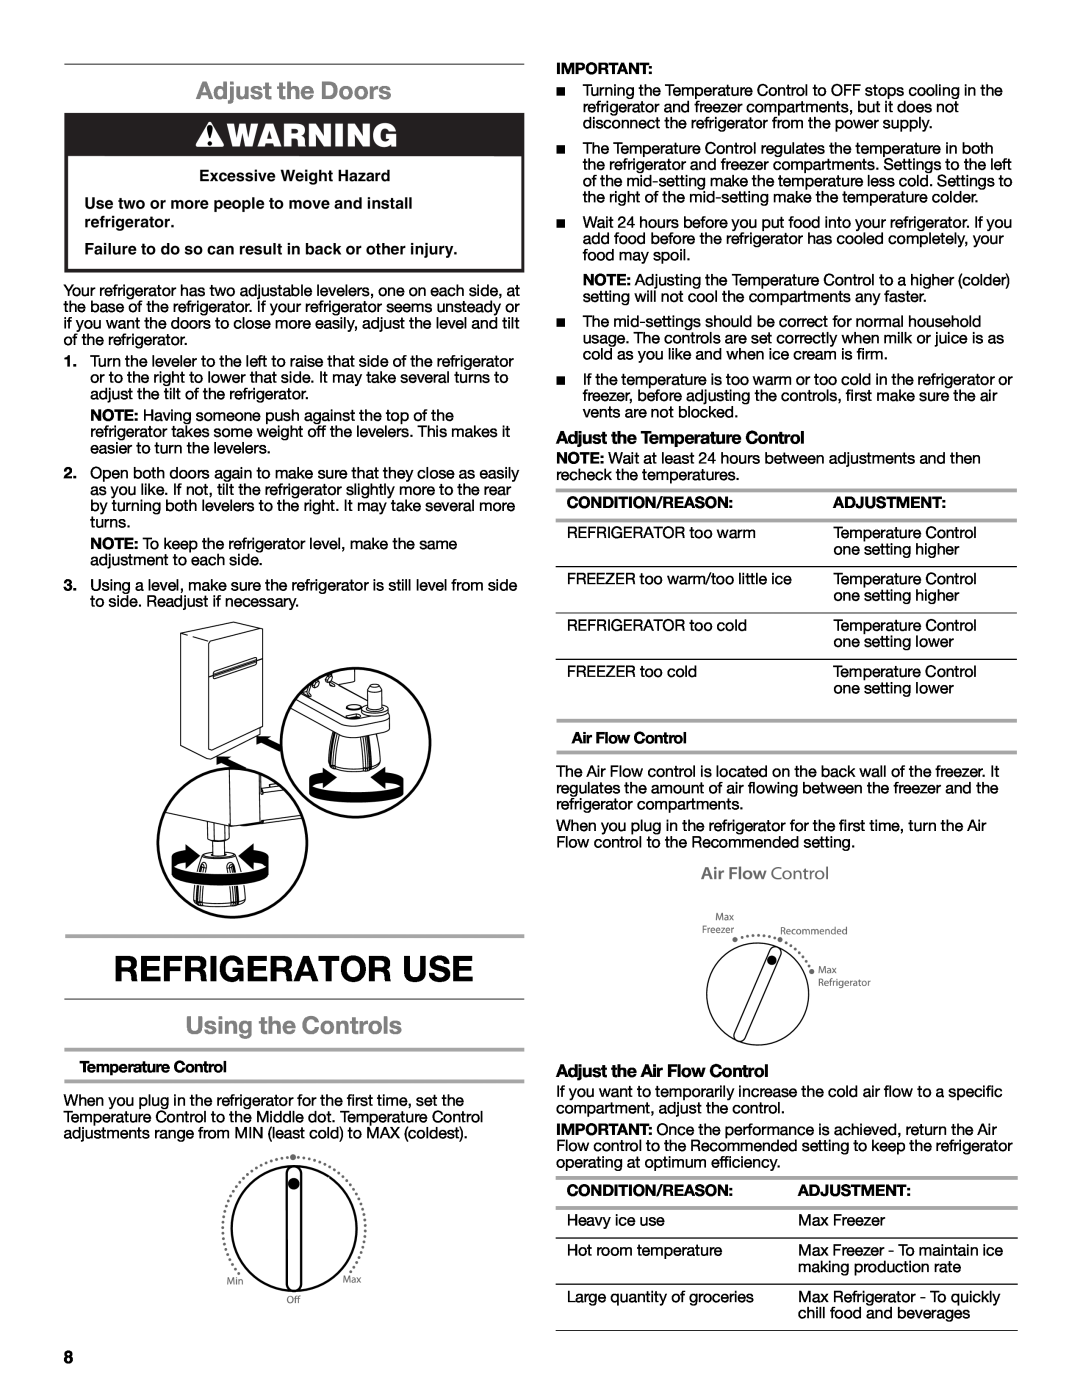 Whirlpool WRT111SFAF Refrigerator Use, Adjust the Doors, Using the Controls, Adjust the Temperature Control, Adjustment 